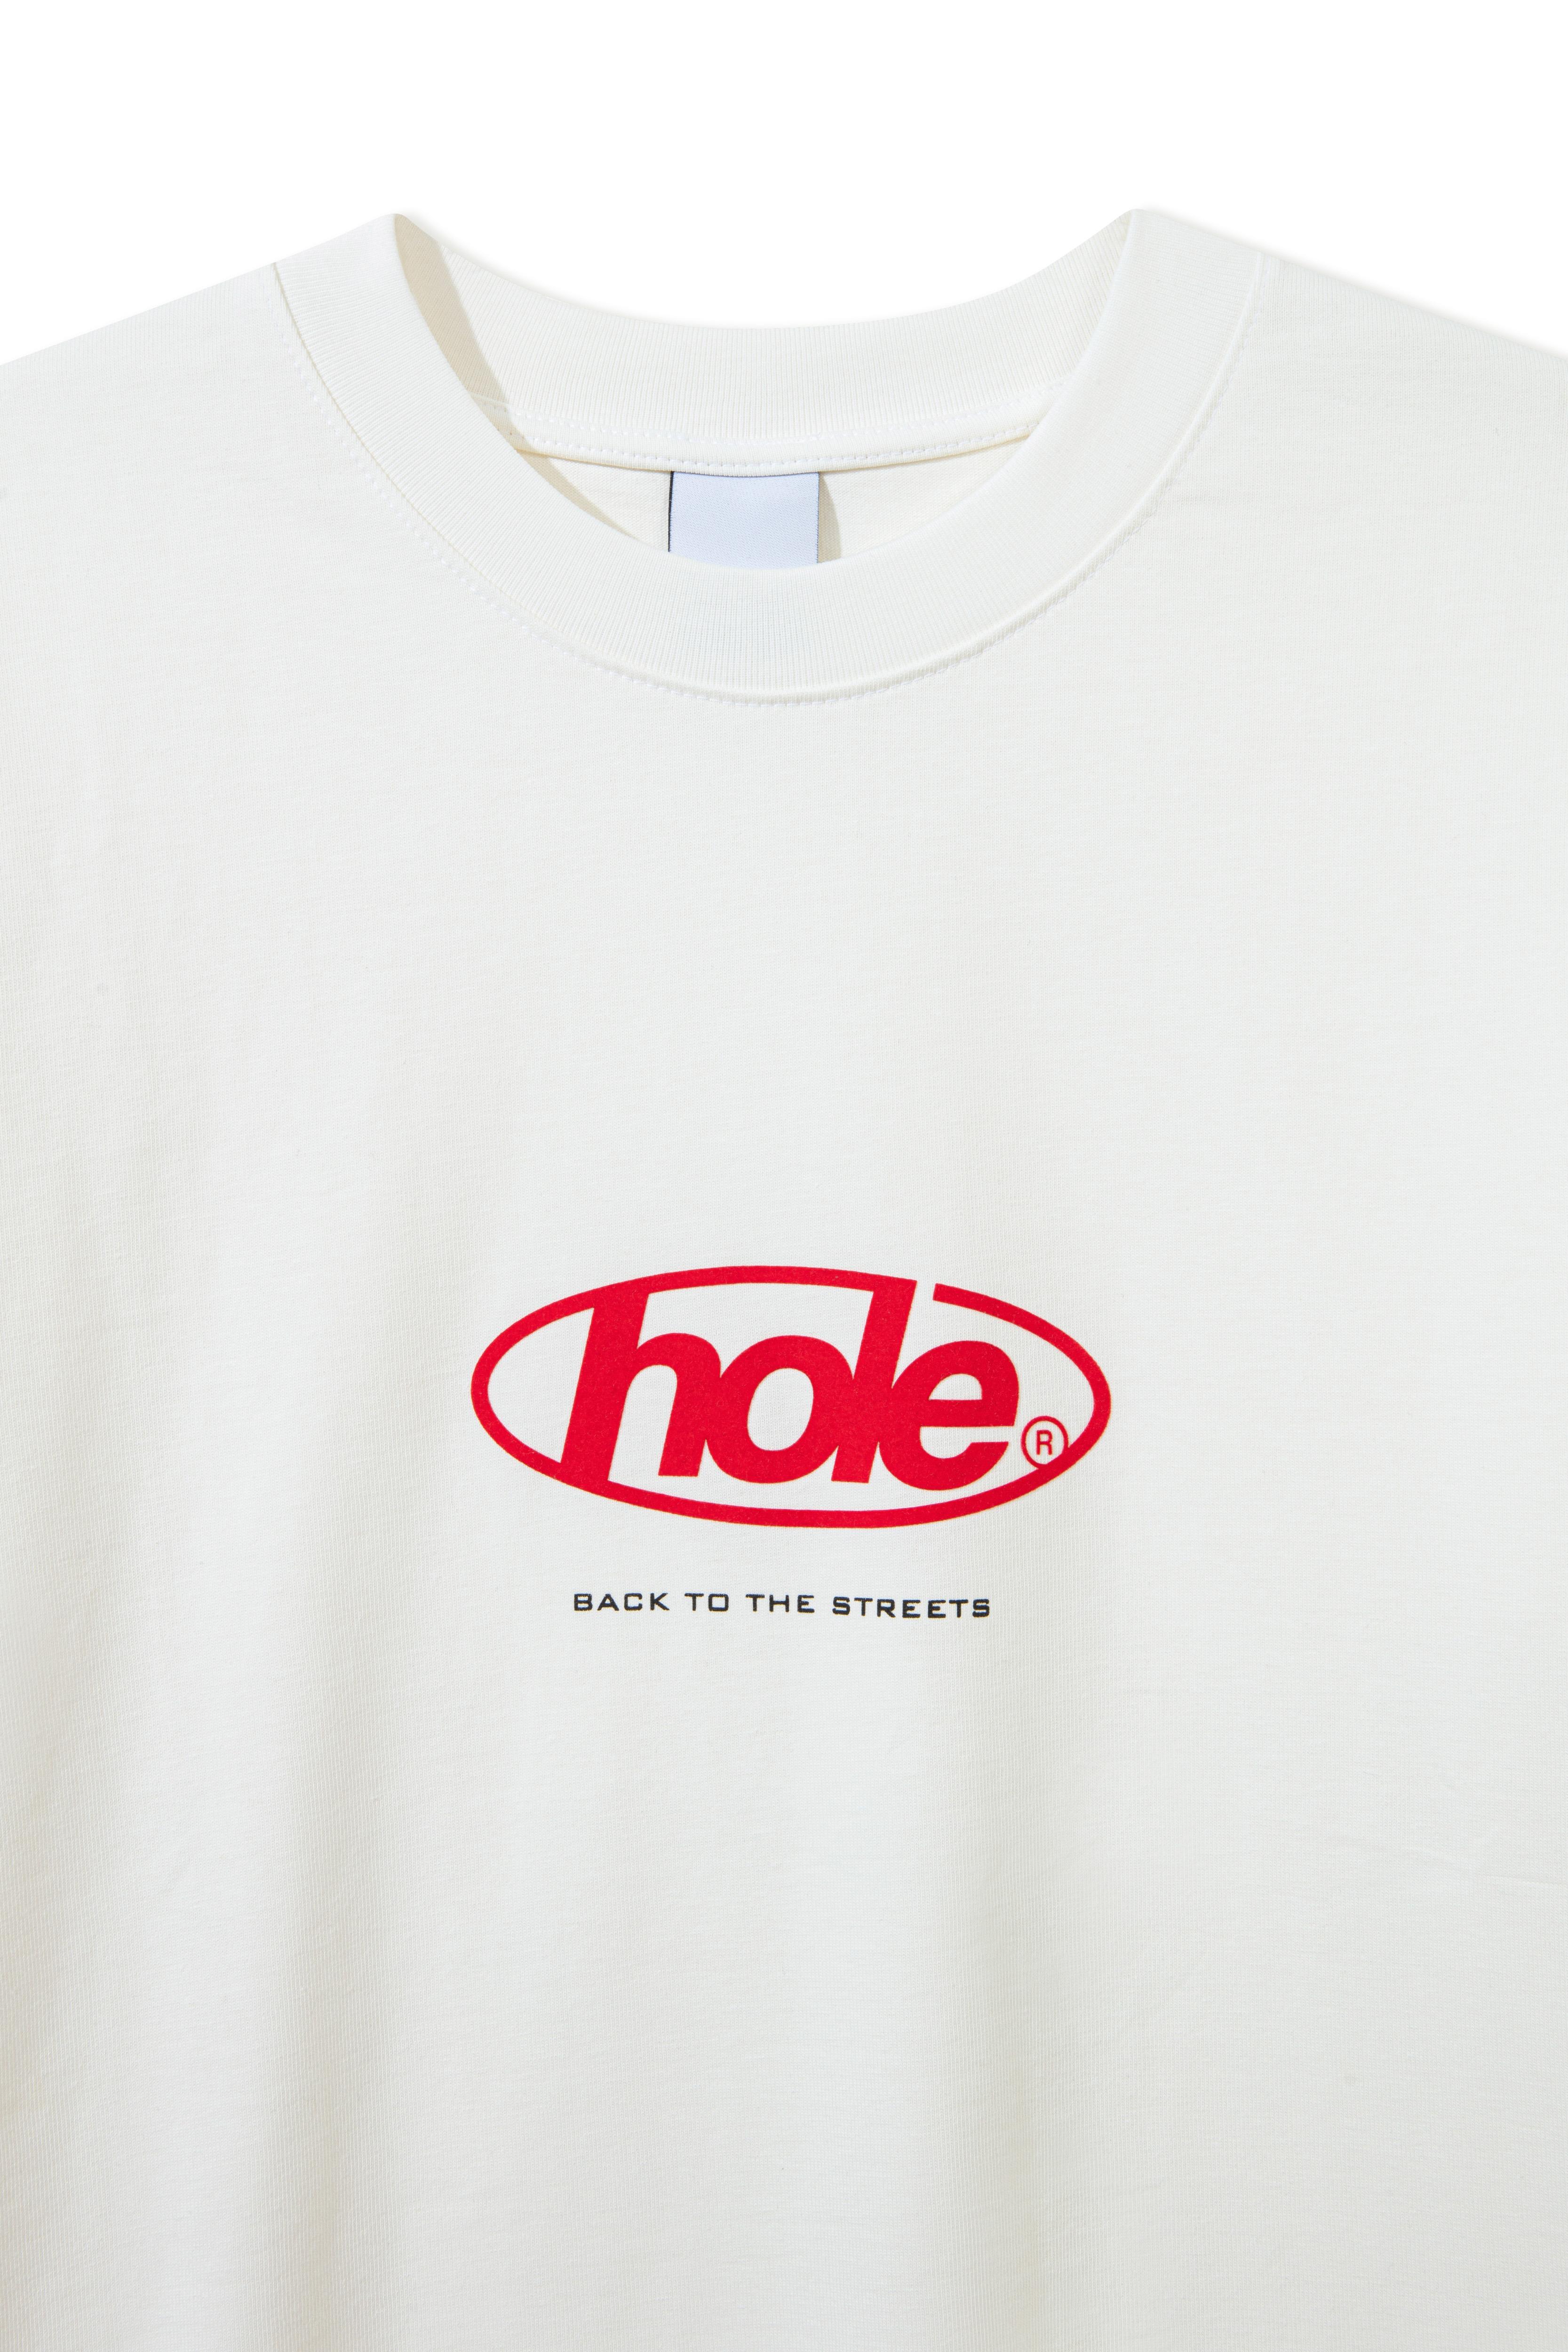 Hole Back to the Streets Baskılı T-Shirt